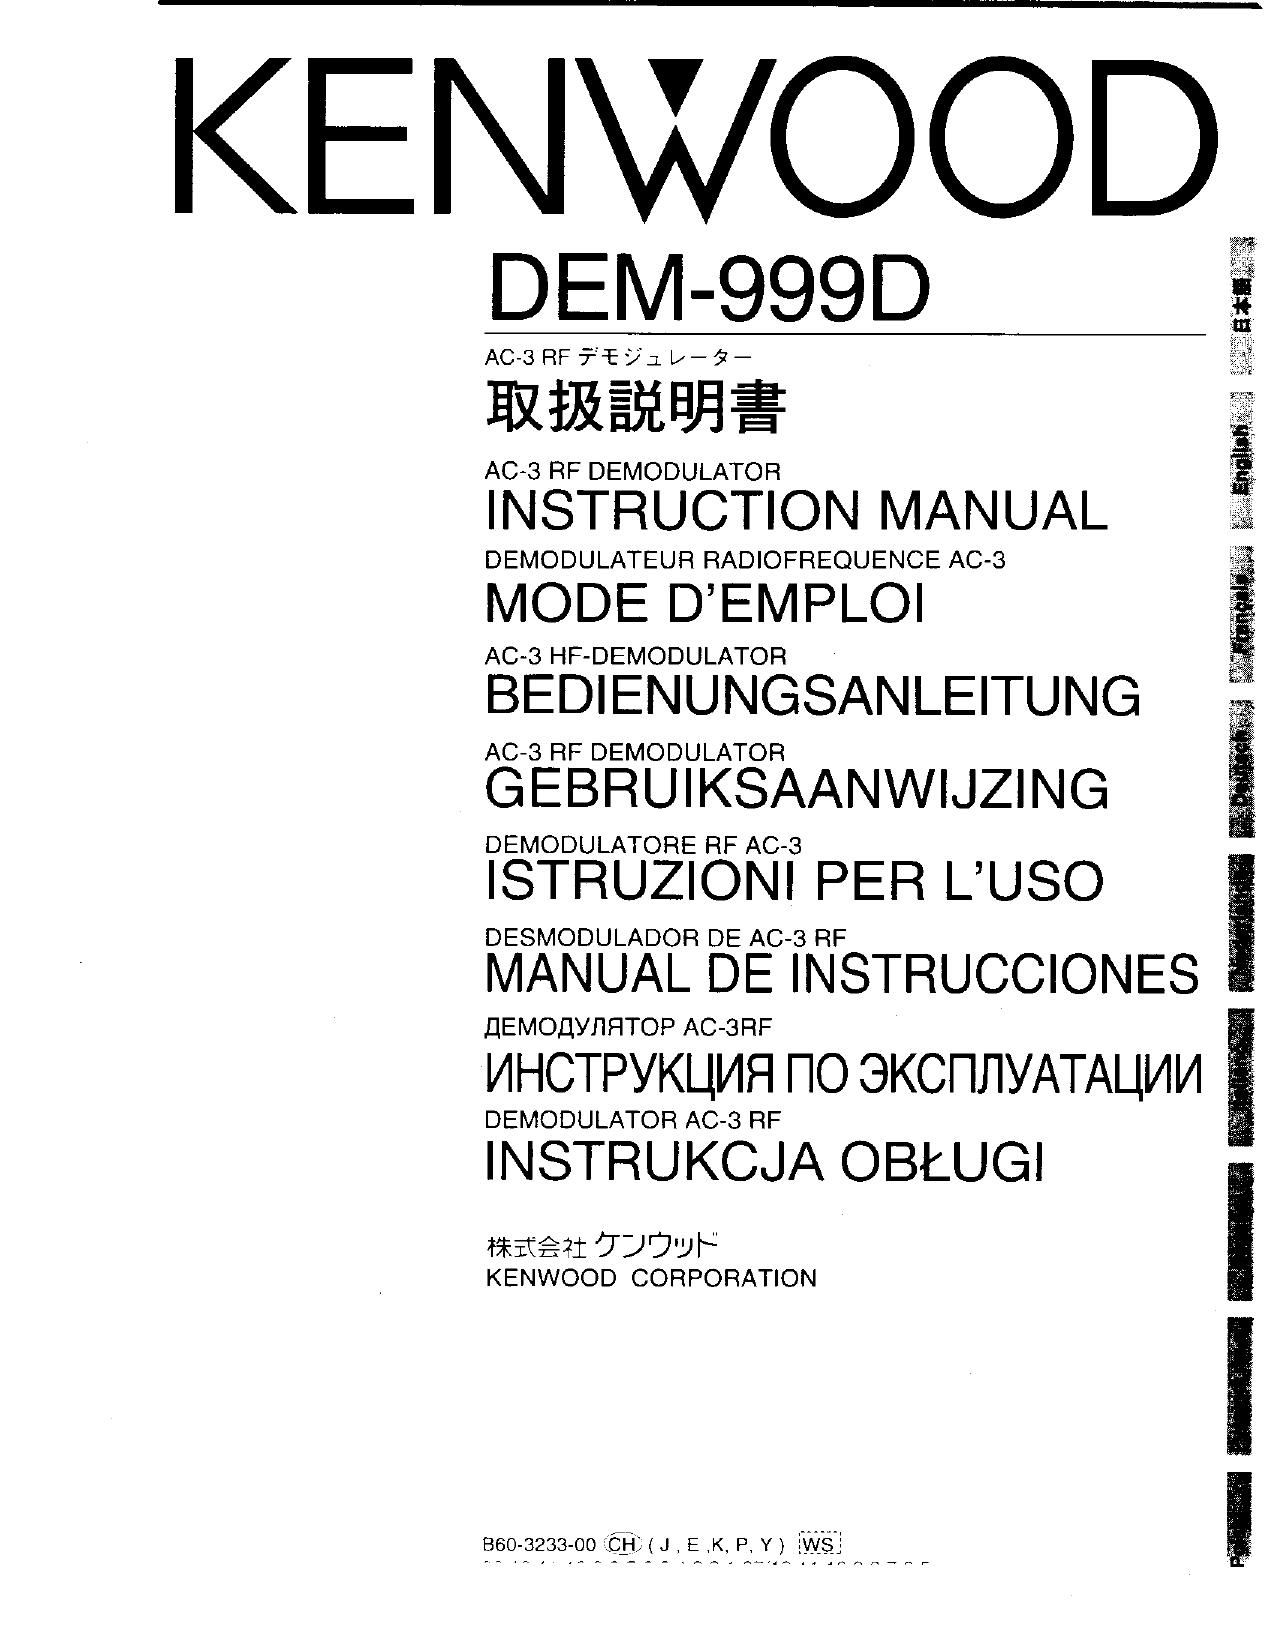 Kenwood DEM 999 D Owners Manual